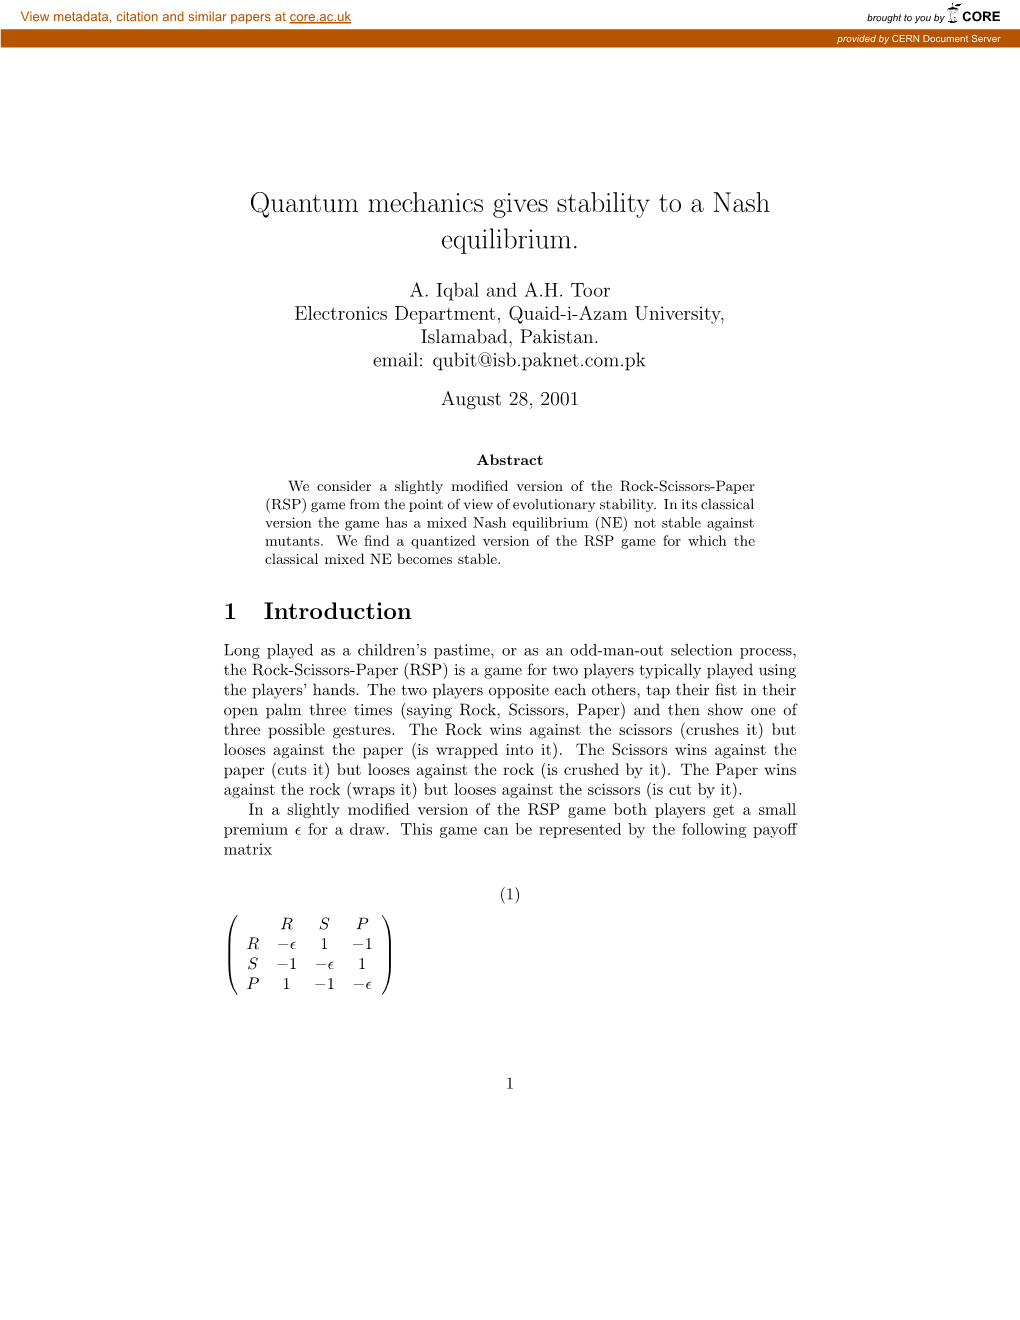 Quantum Mechanics Gives Stability to a Nash Equilibrium